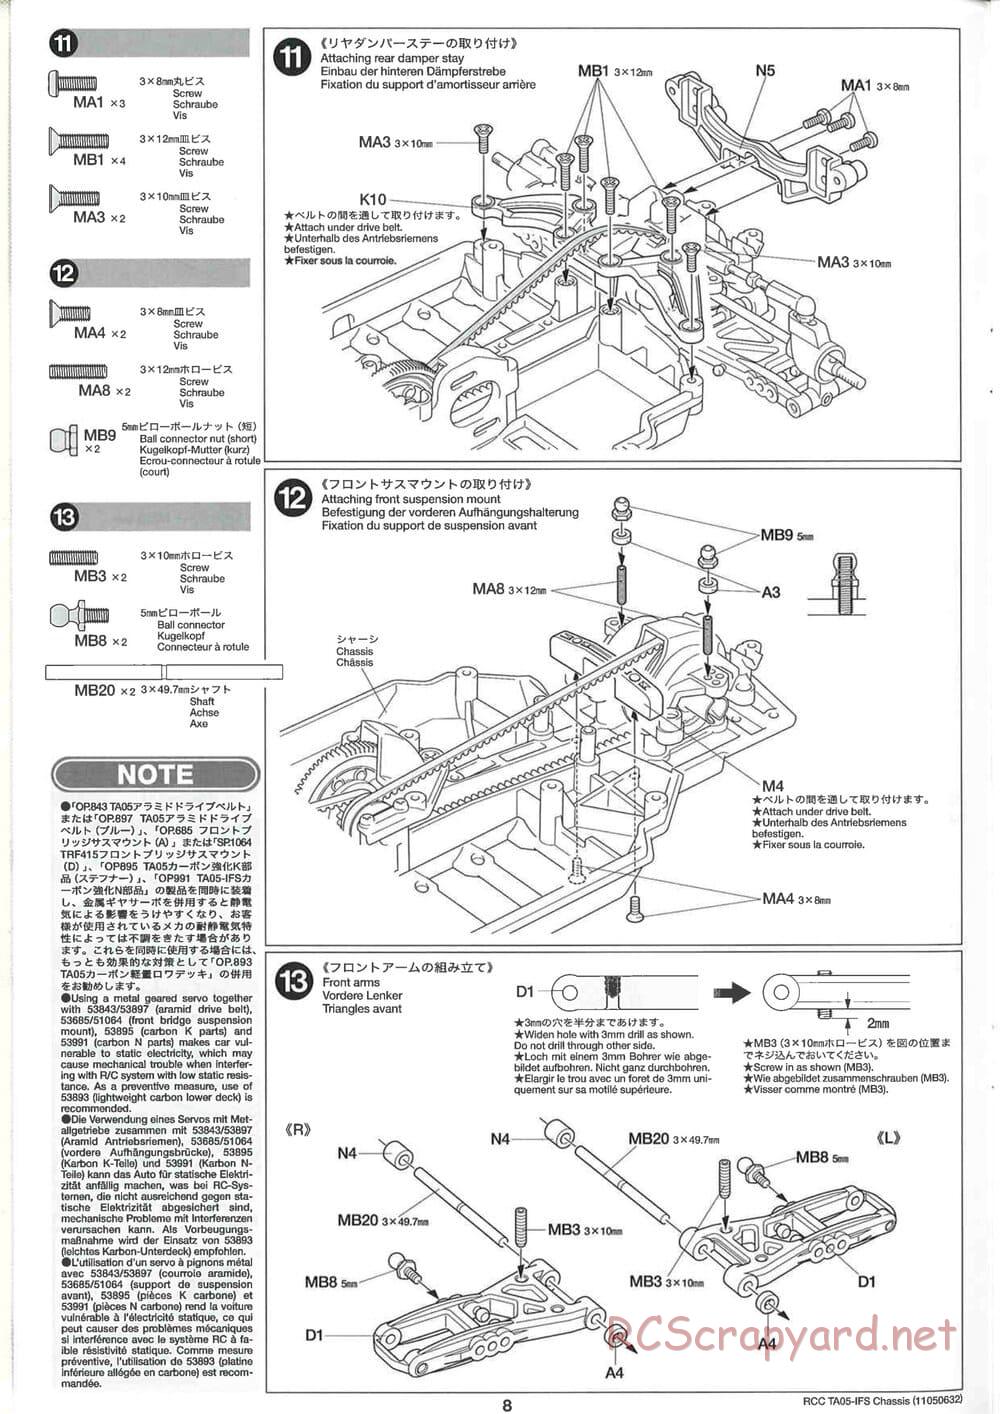 Tamiya - TA05-IFS Chassis - Manual - Page 8